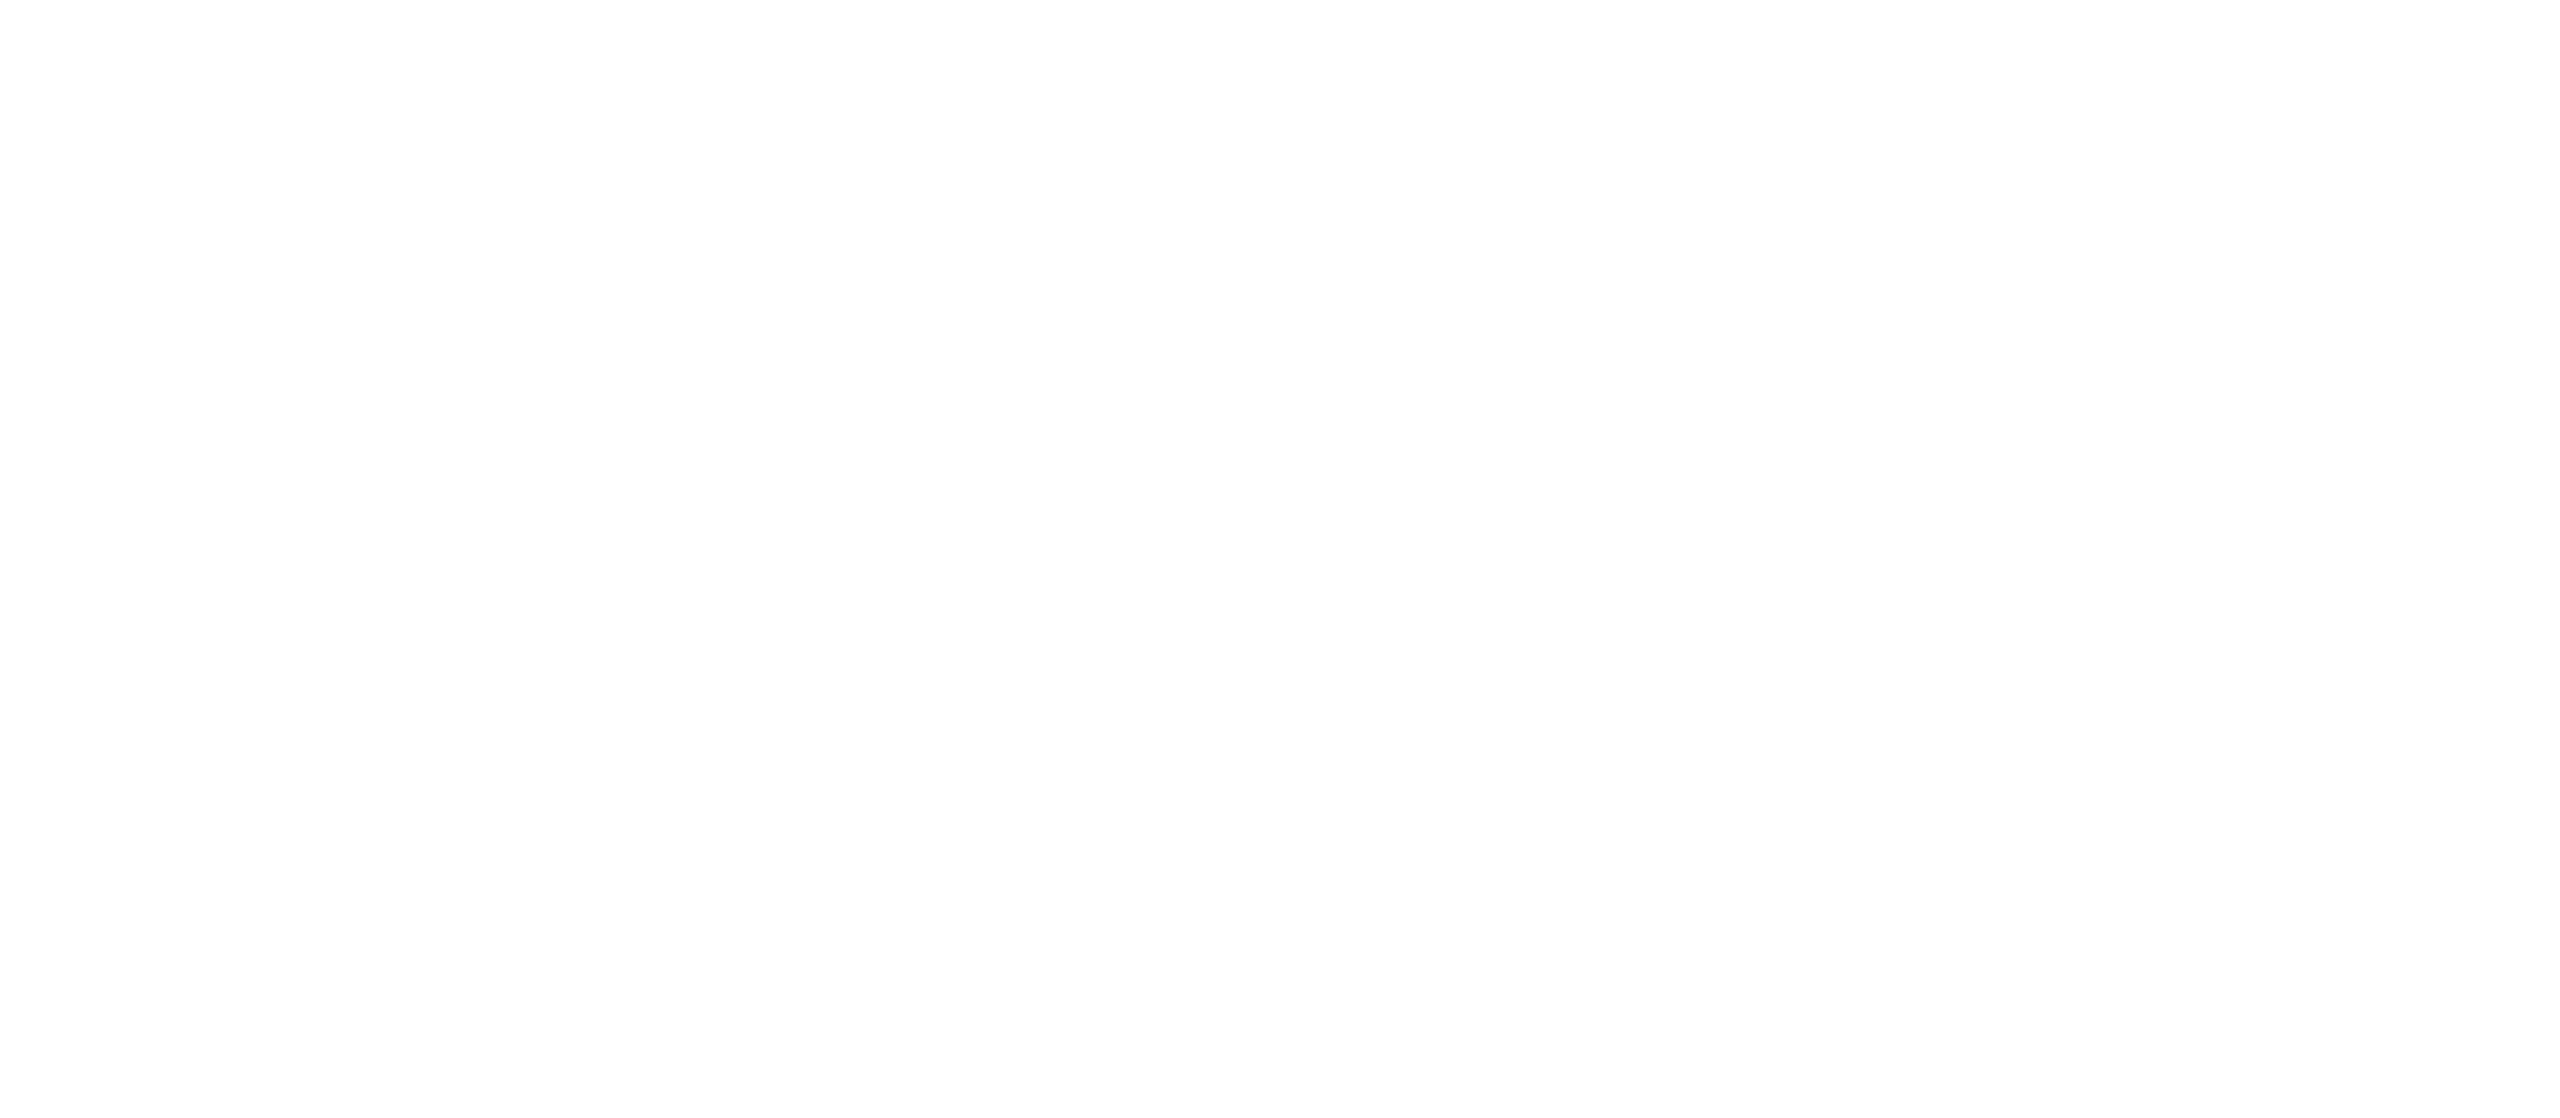 Qileo le 1er compte pro vert